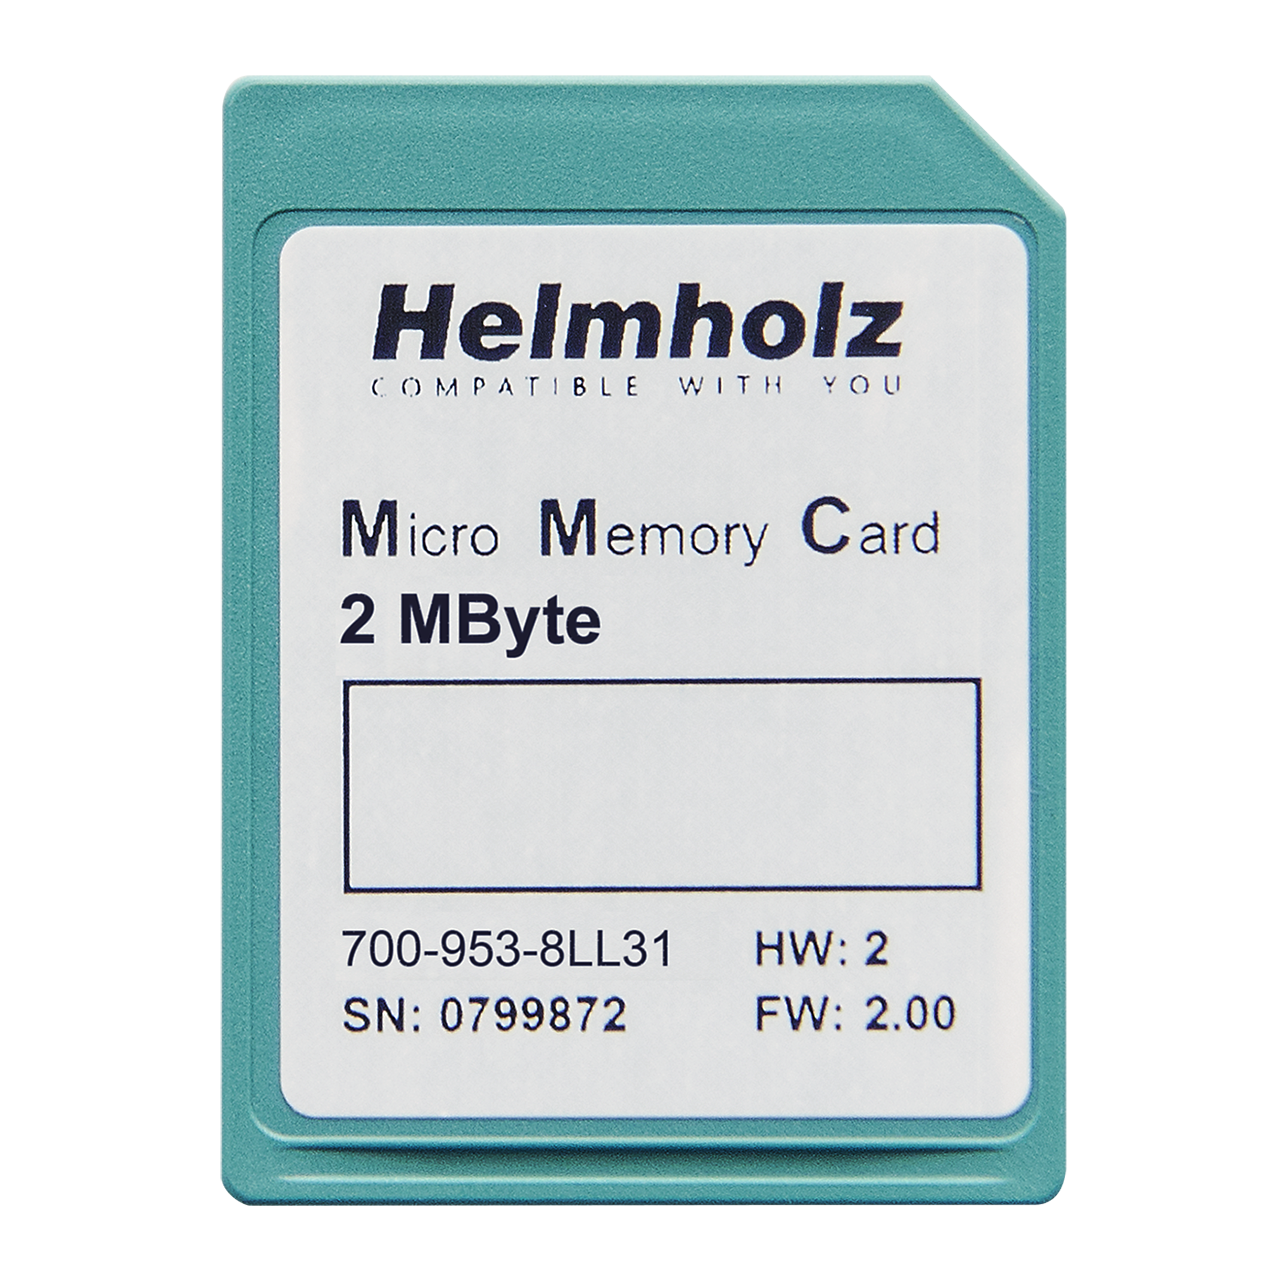 Helmholz Micro Tarjeta de Memoria, 2 MByte 700-953-8LL31